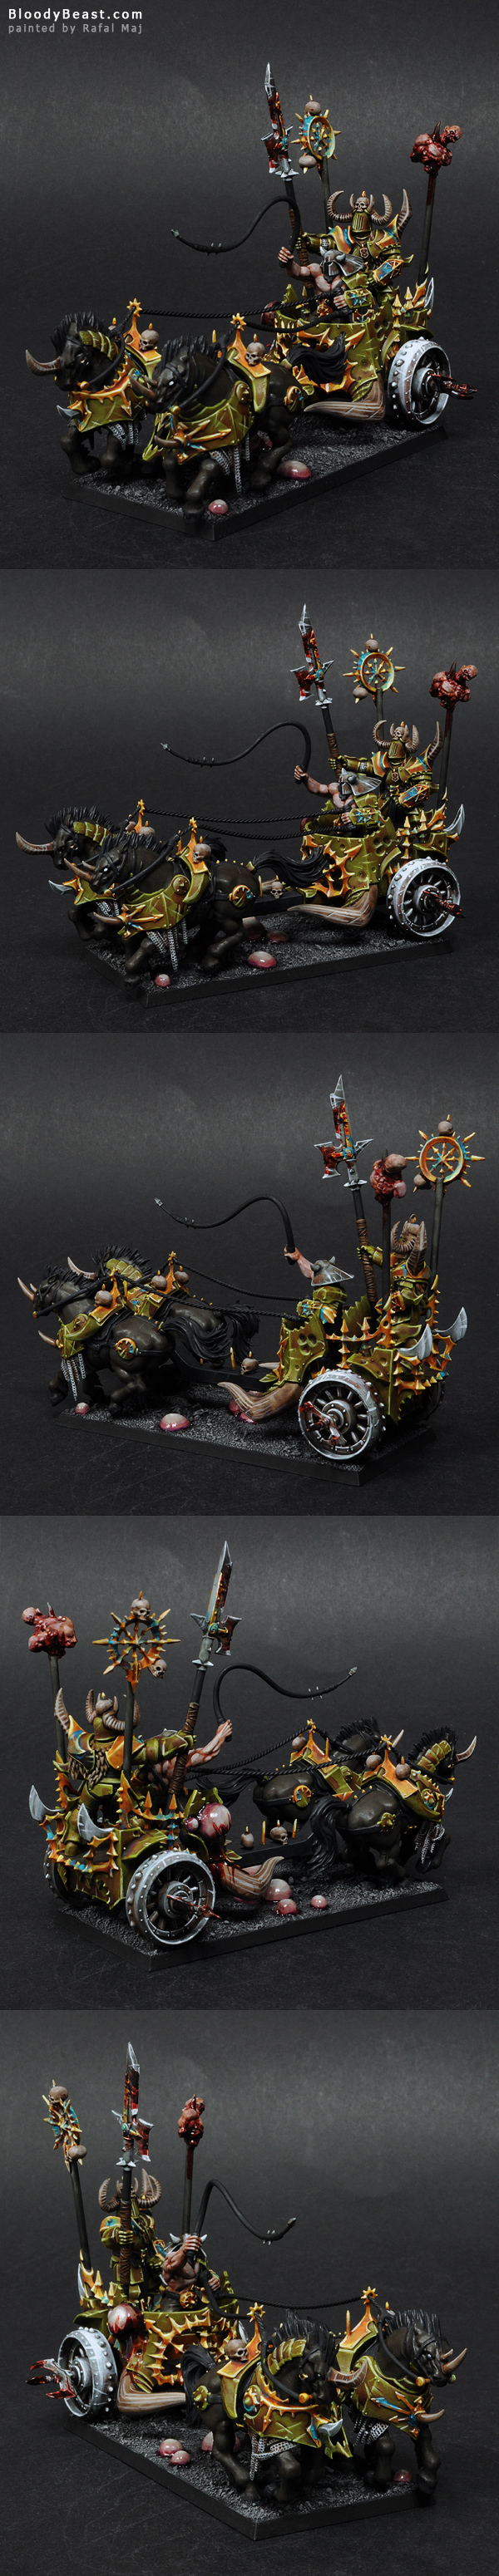 Nurgle Chaos Chariot painted by Rafal Maj (BloodyBeast.com)